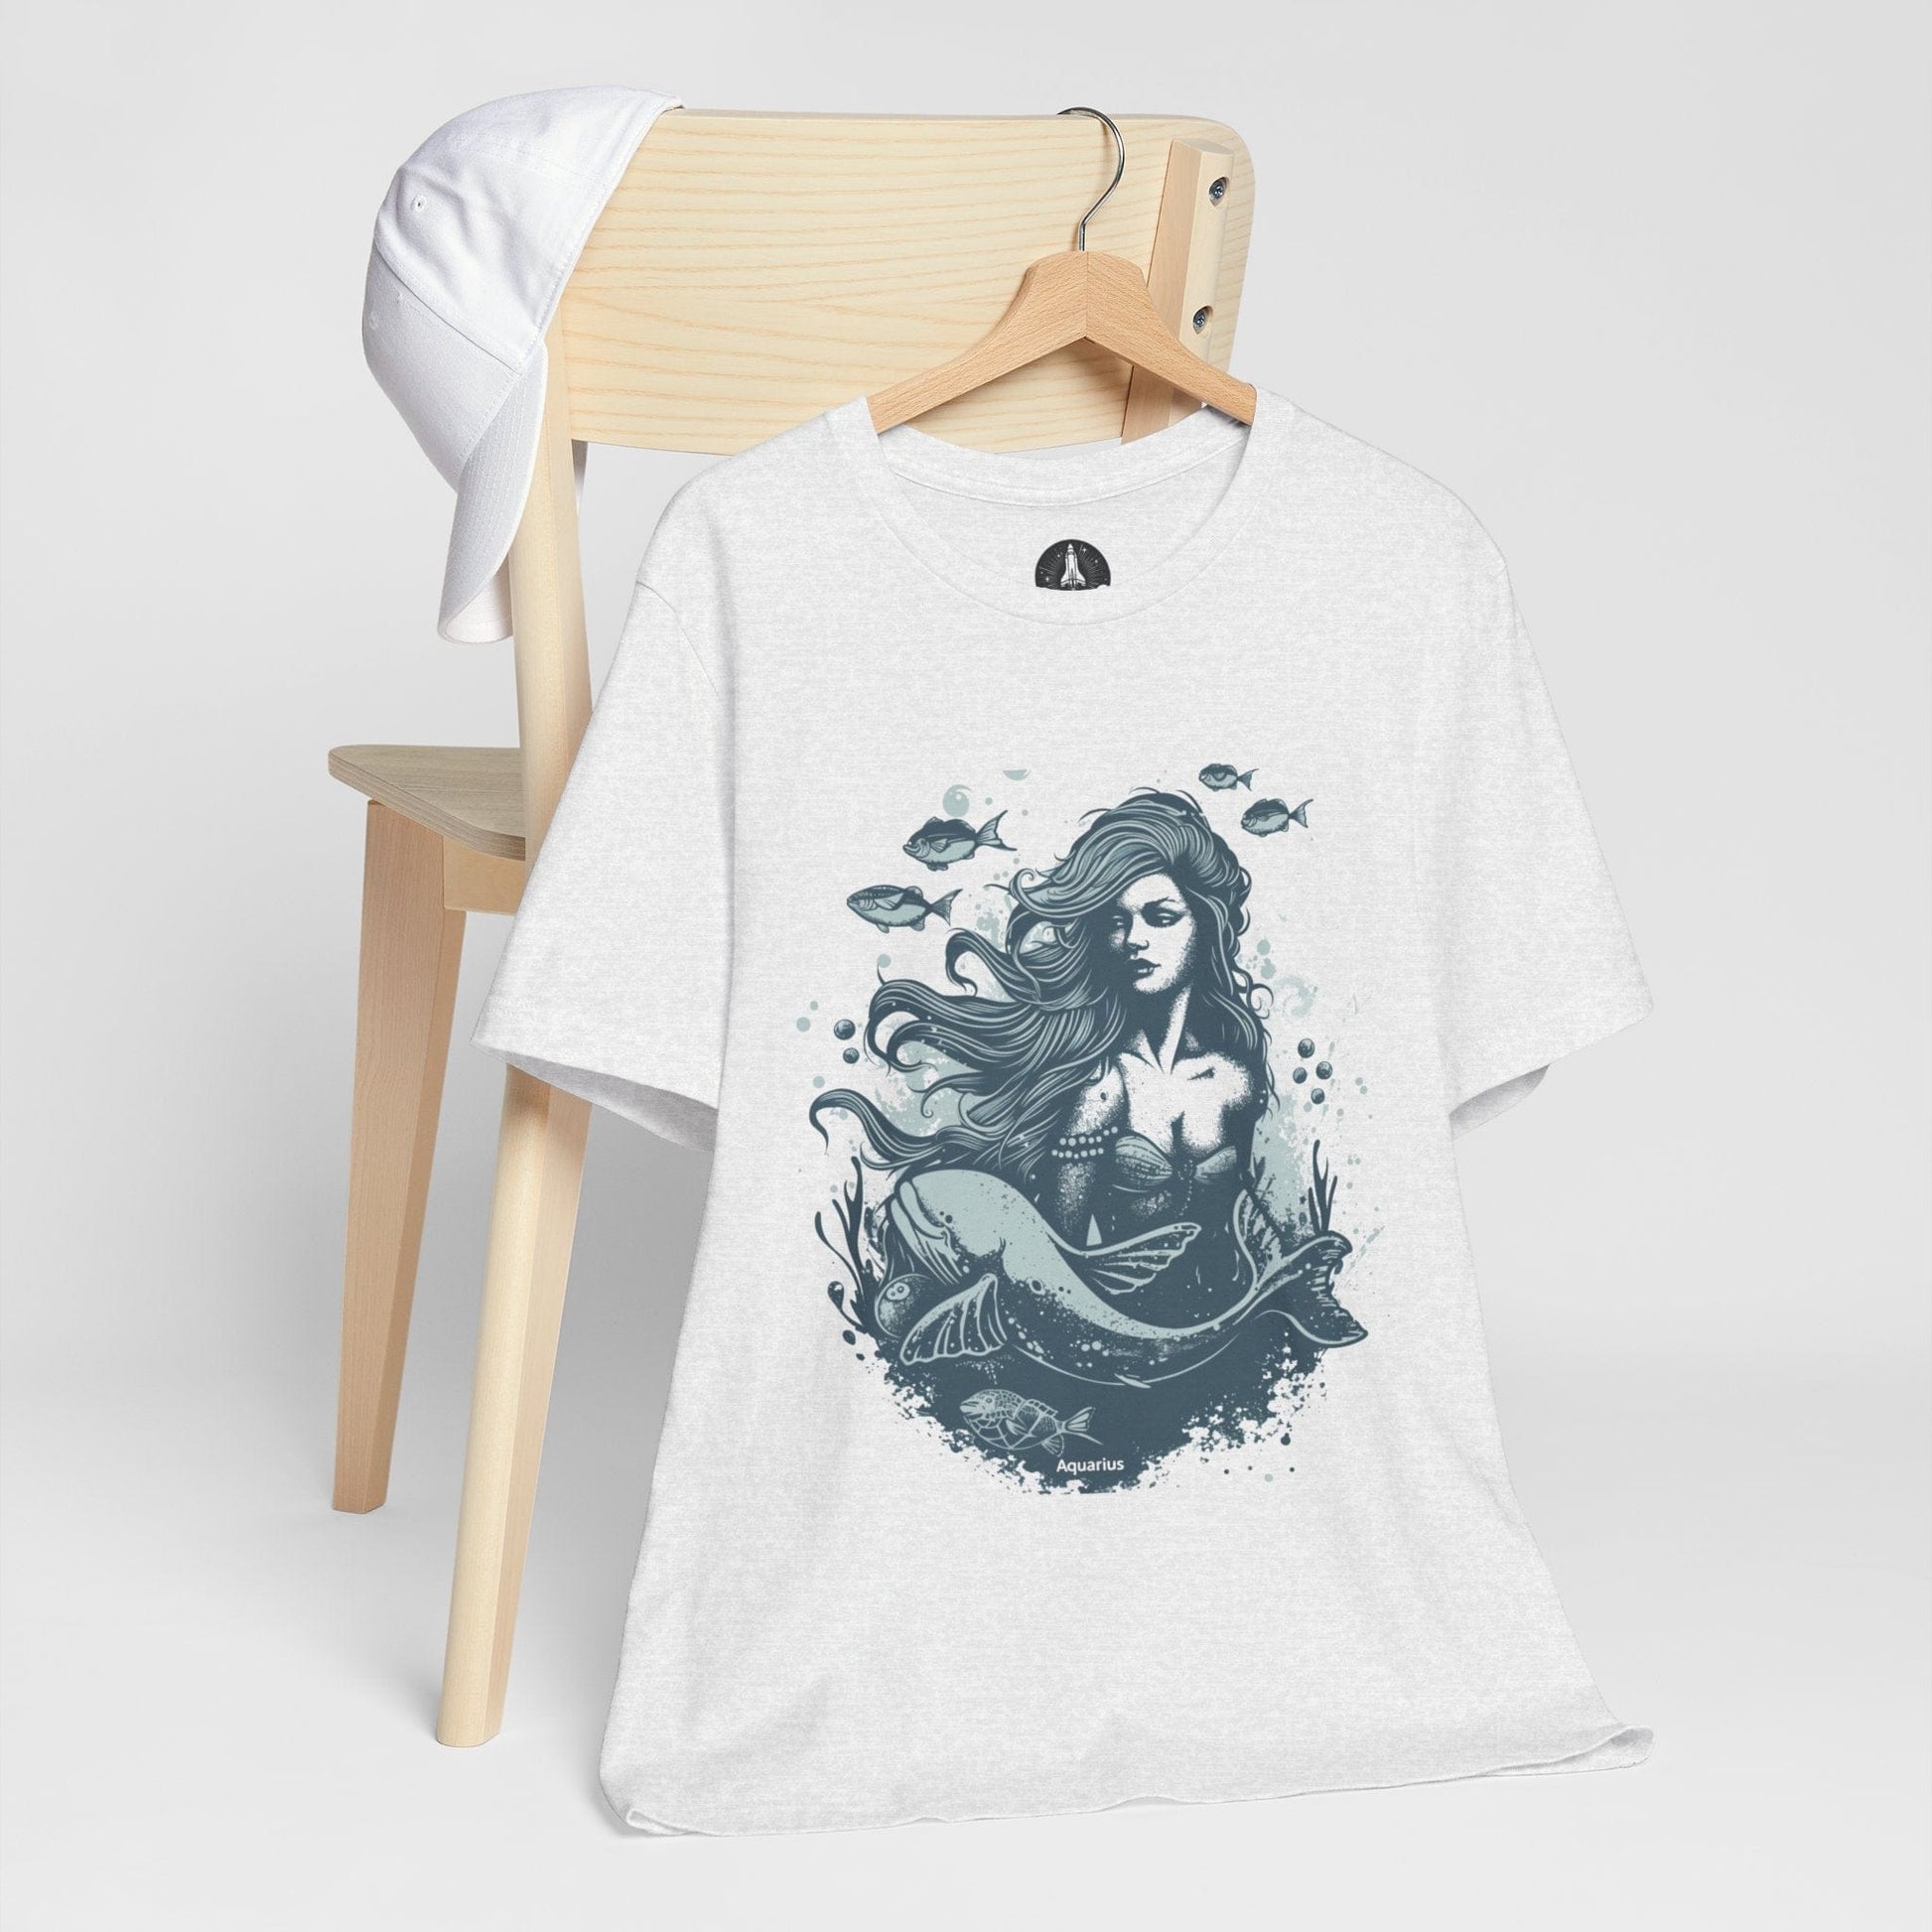 T-Shirt Aquarius Siren T-Shirt: Enchanting Depths for the Visionary Spirit